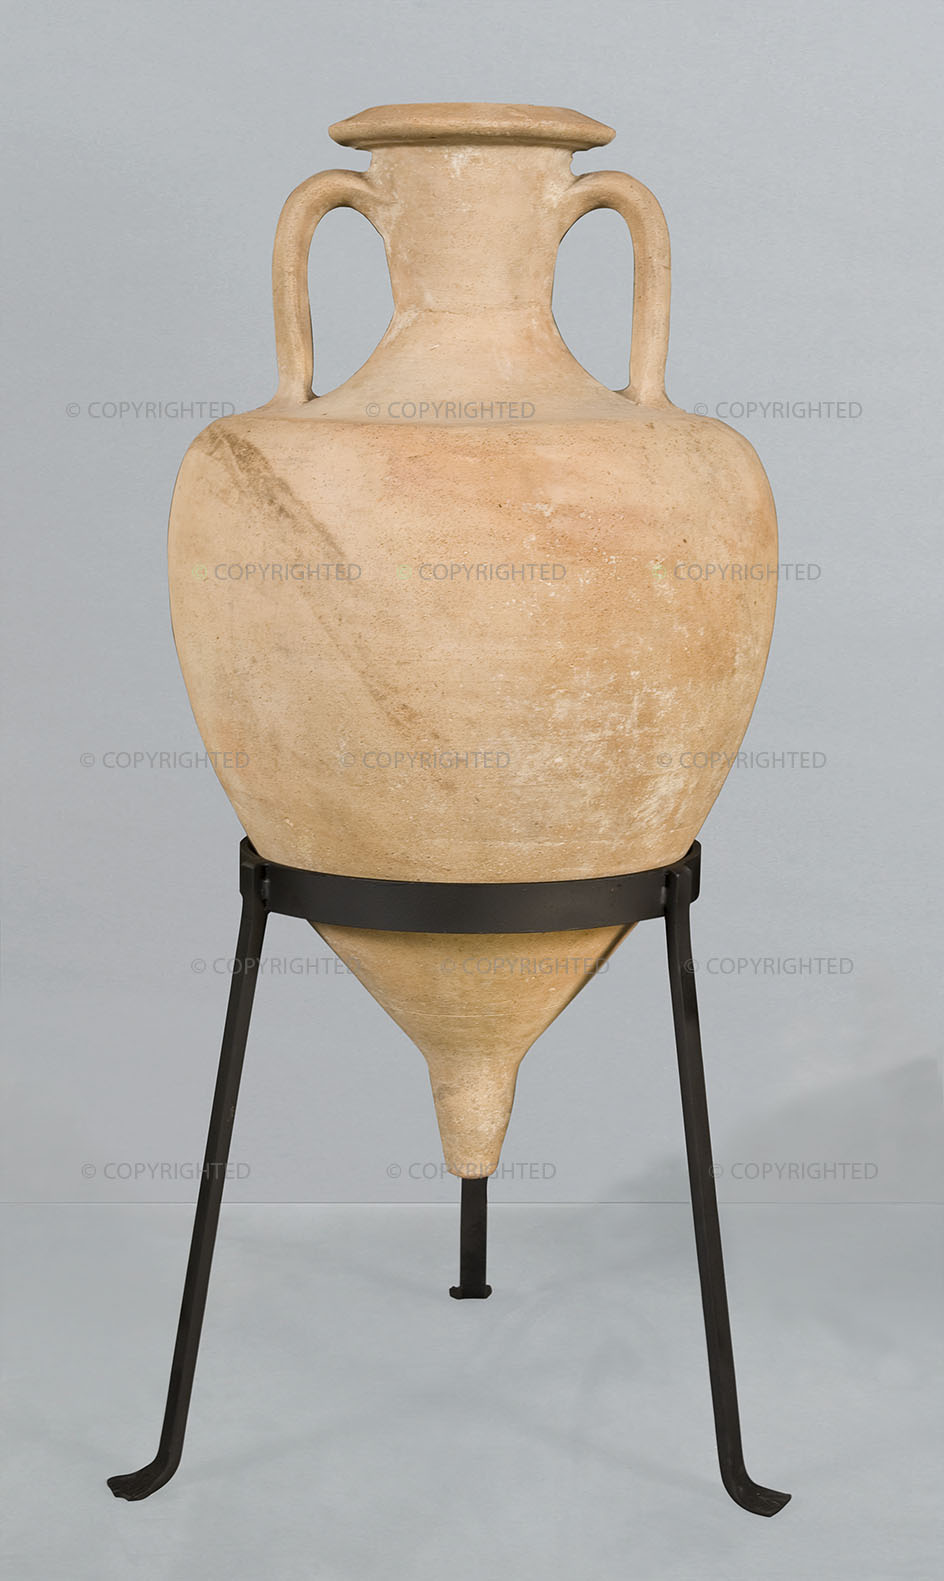 Ancient Graeco-Italic amphora